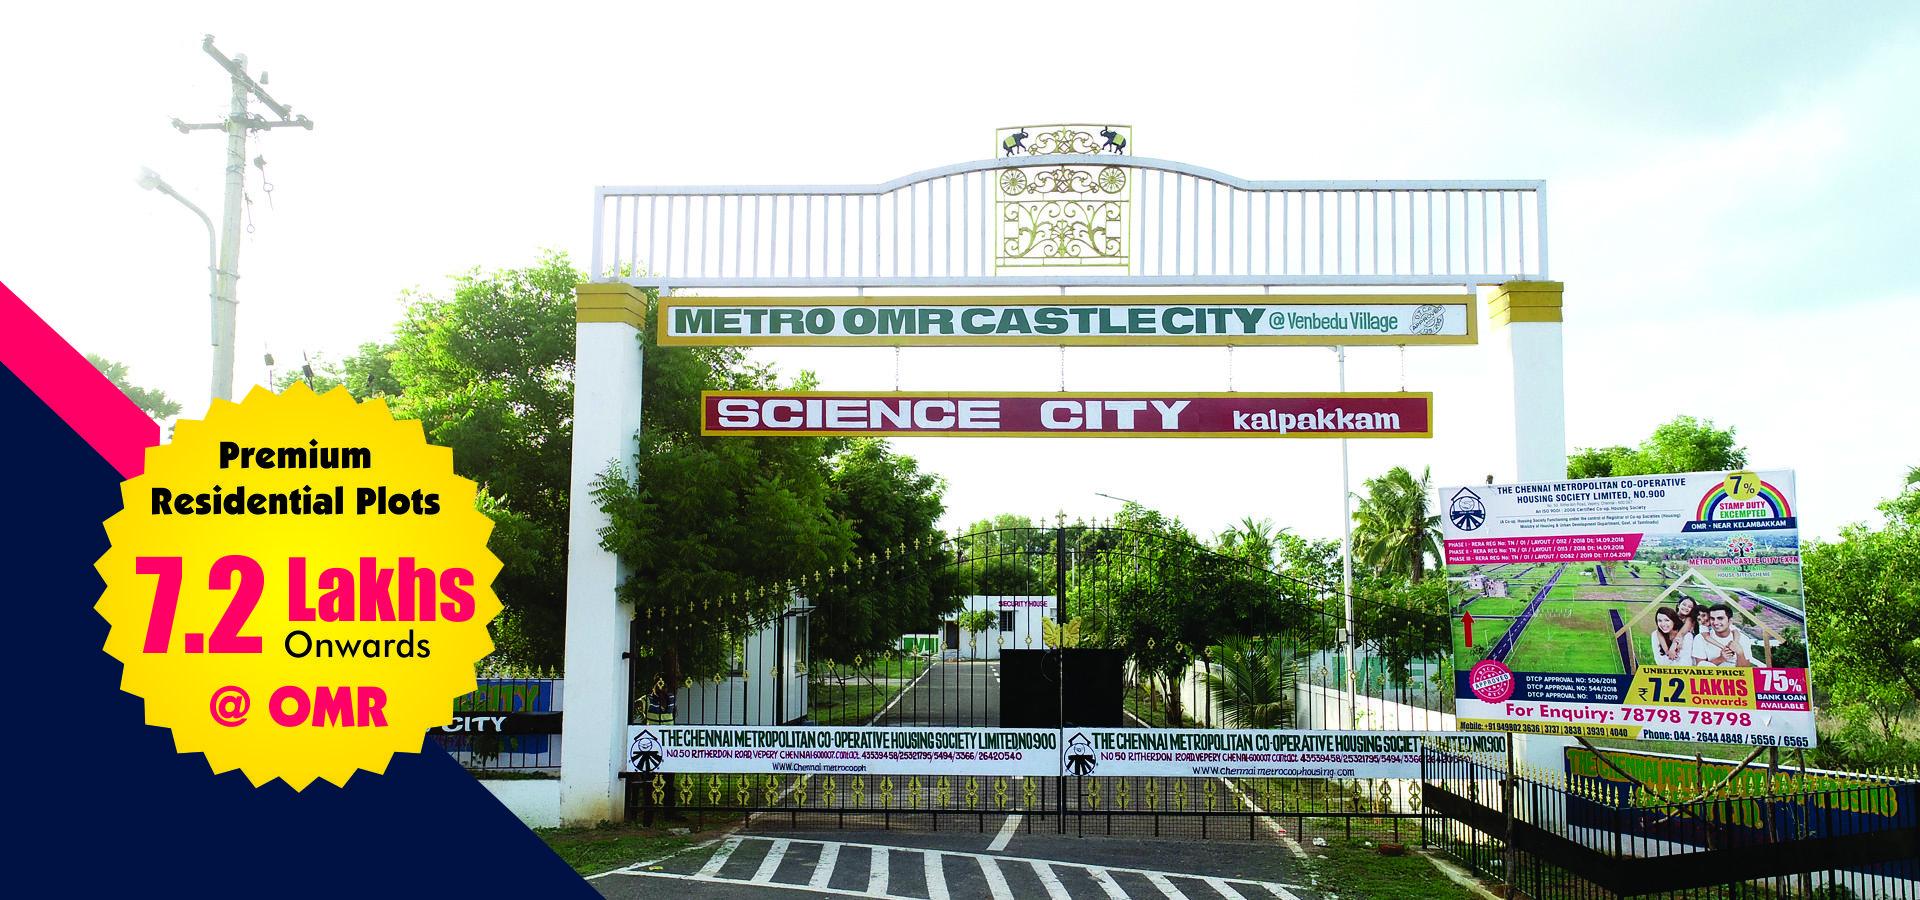 Metro-OMR-Castle-City